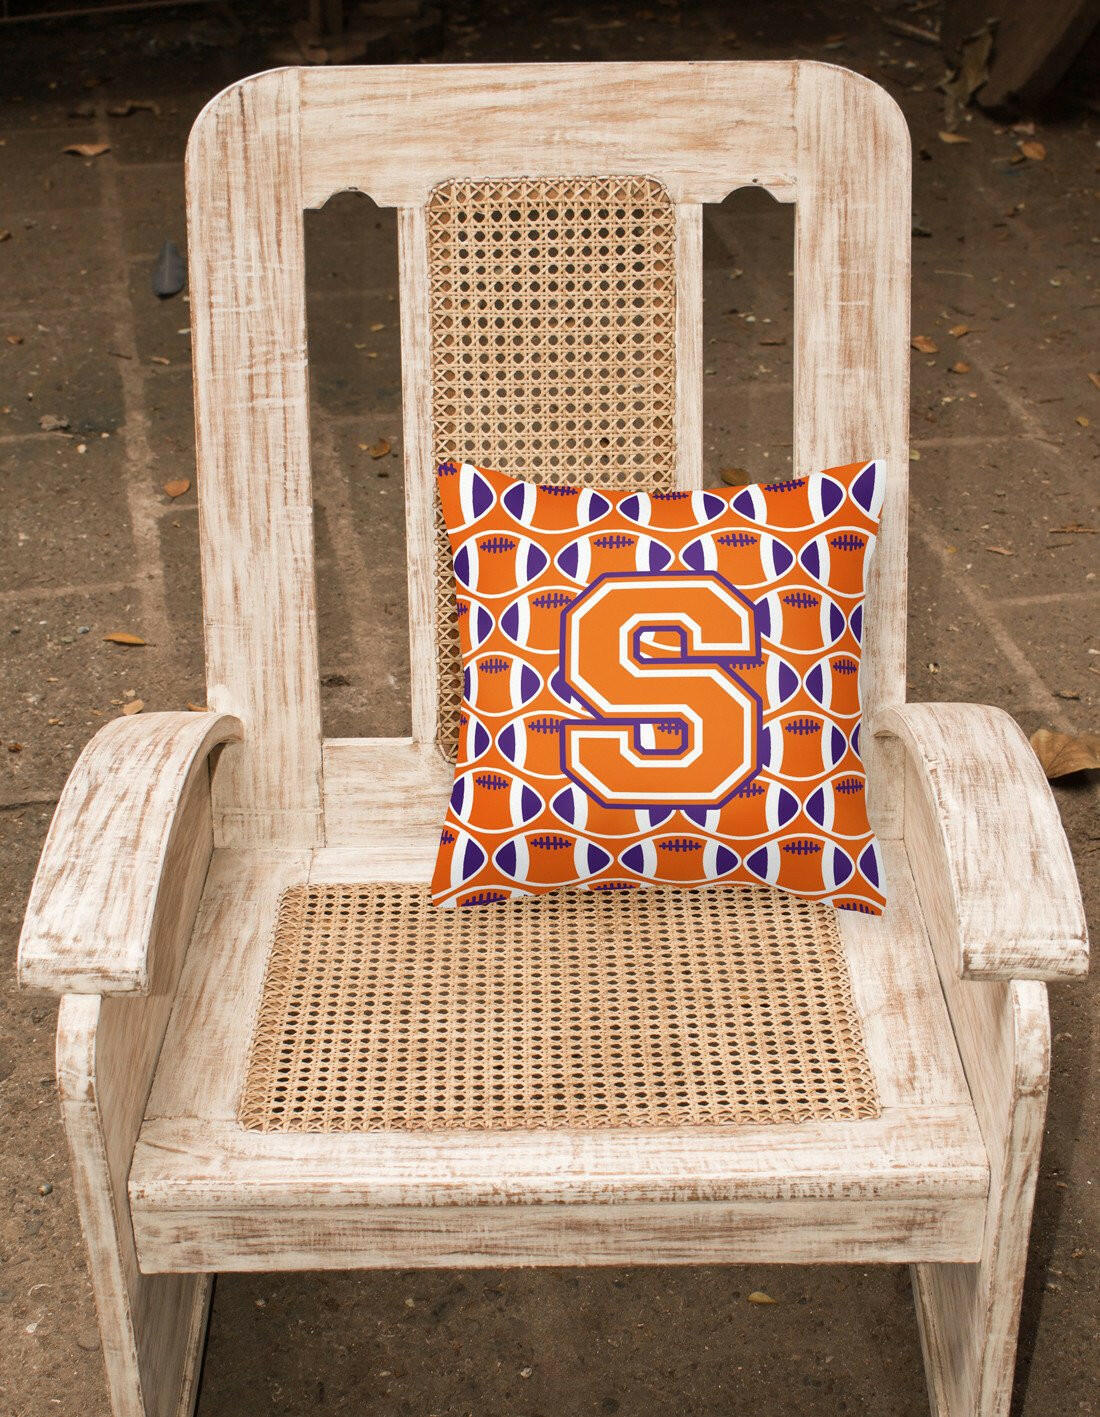 Letter S Football Orange, White and Regalia Fabric Decorative Pillow CJ1072-SPW1414 by Caroline's Treasures